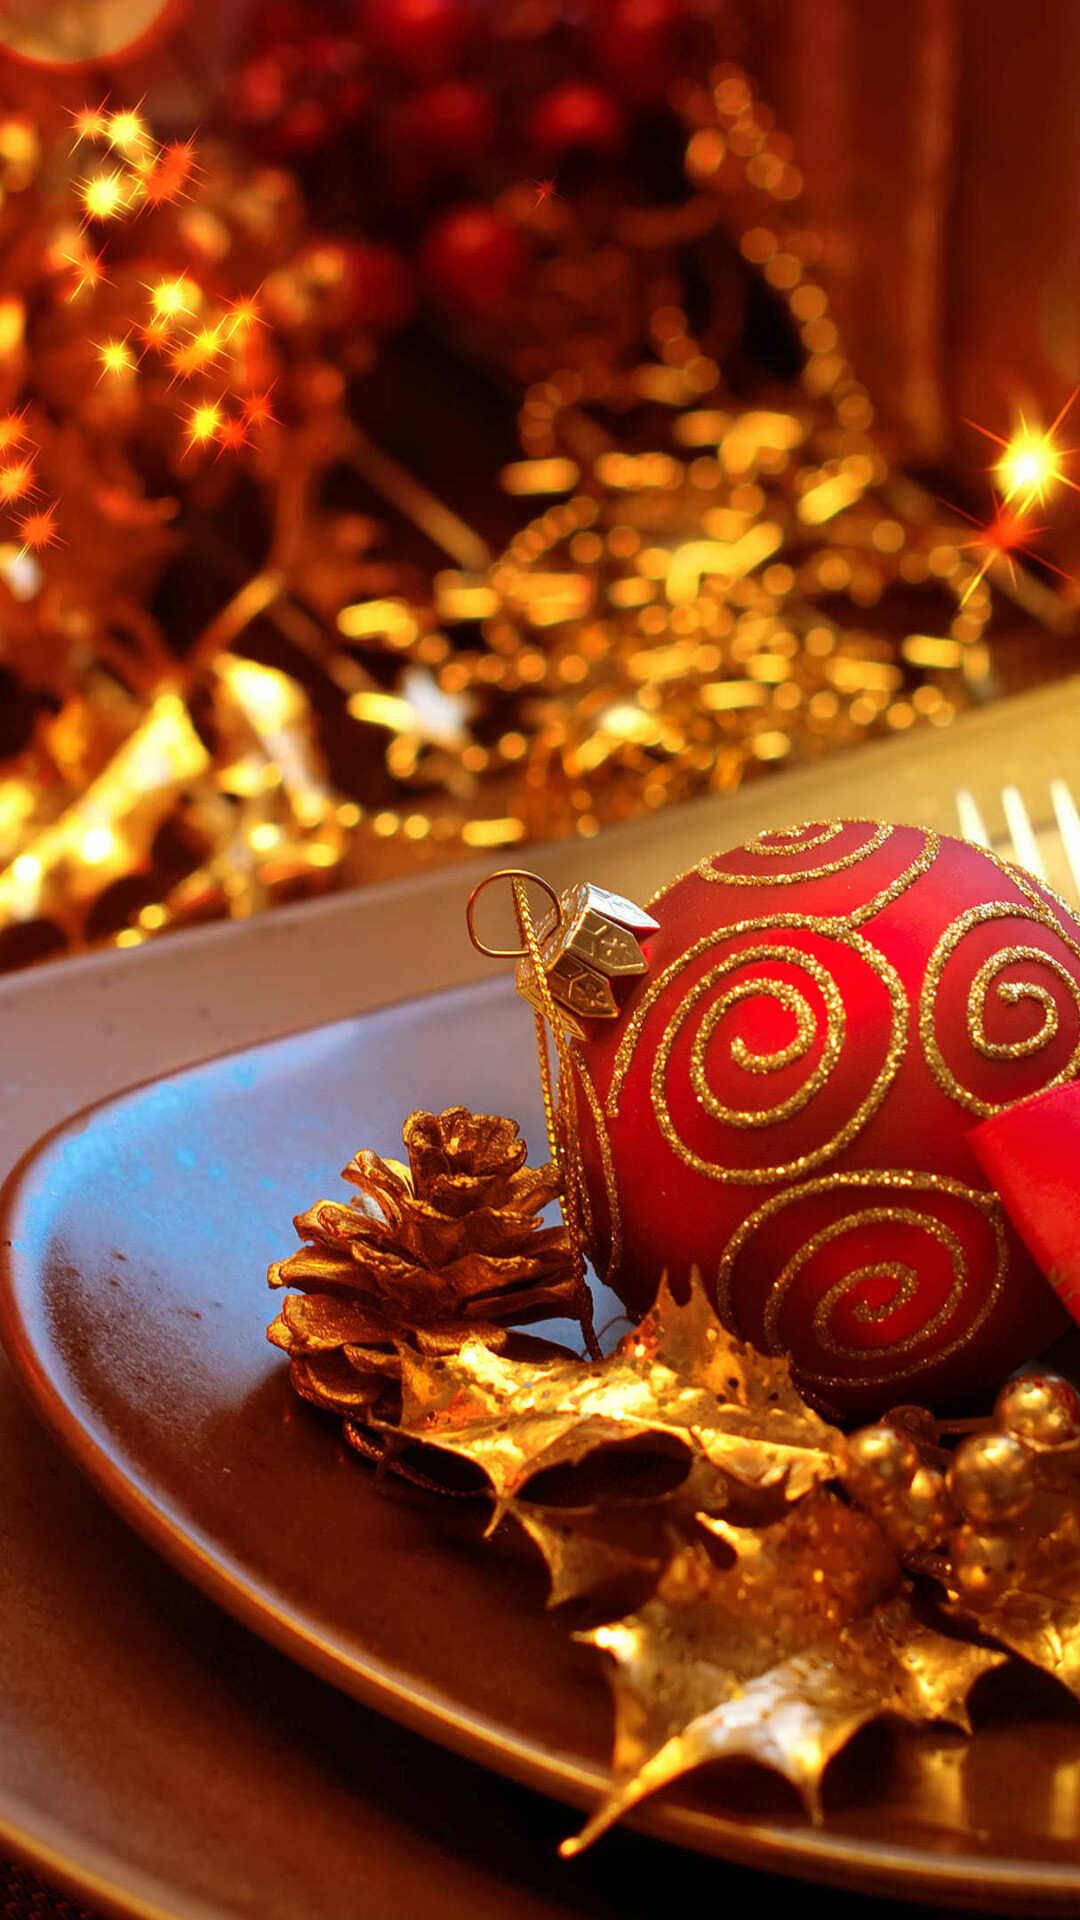 Christmas Ornament: Blown-glass bulb, Tradition, Winter holidays. 1080x1920 Full HD Wallpaper.